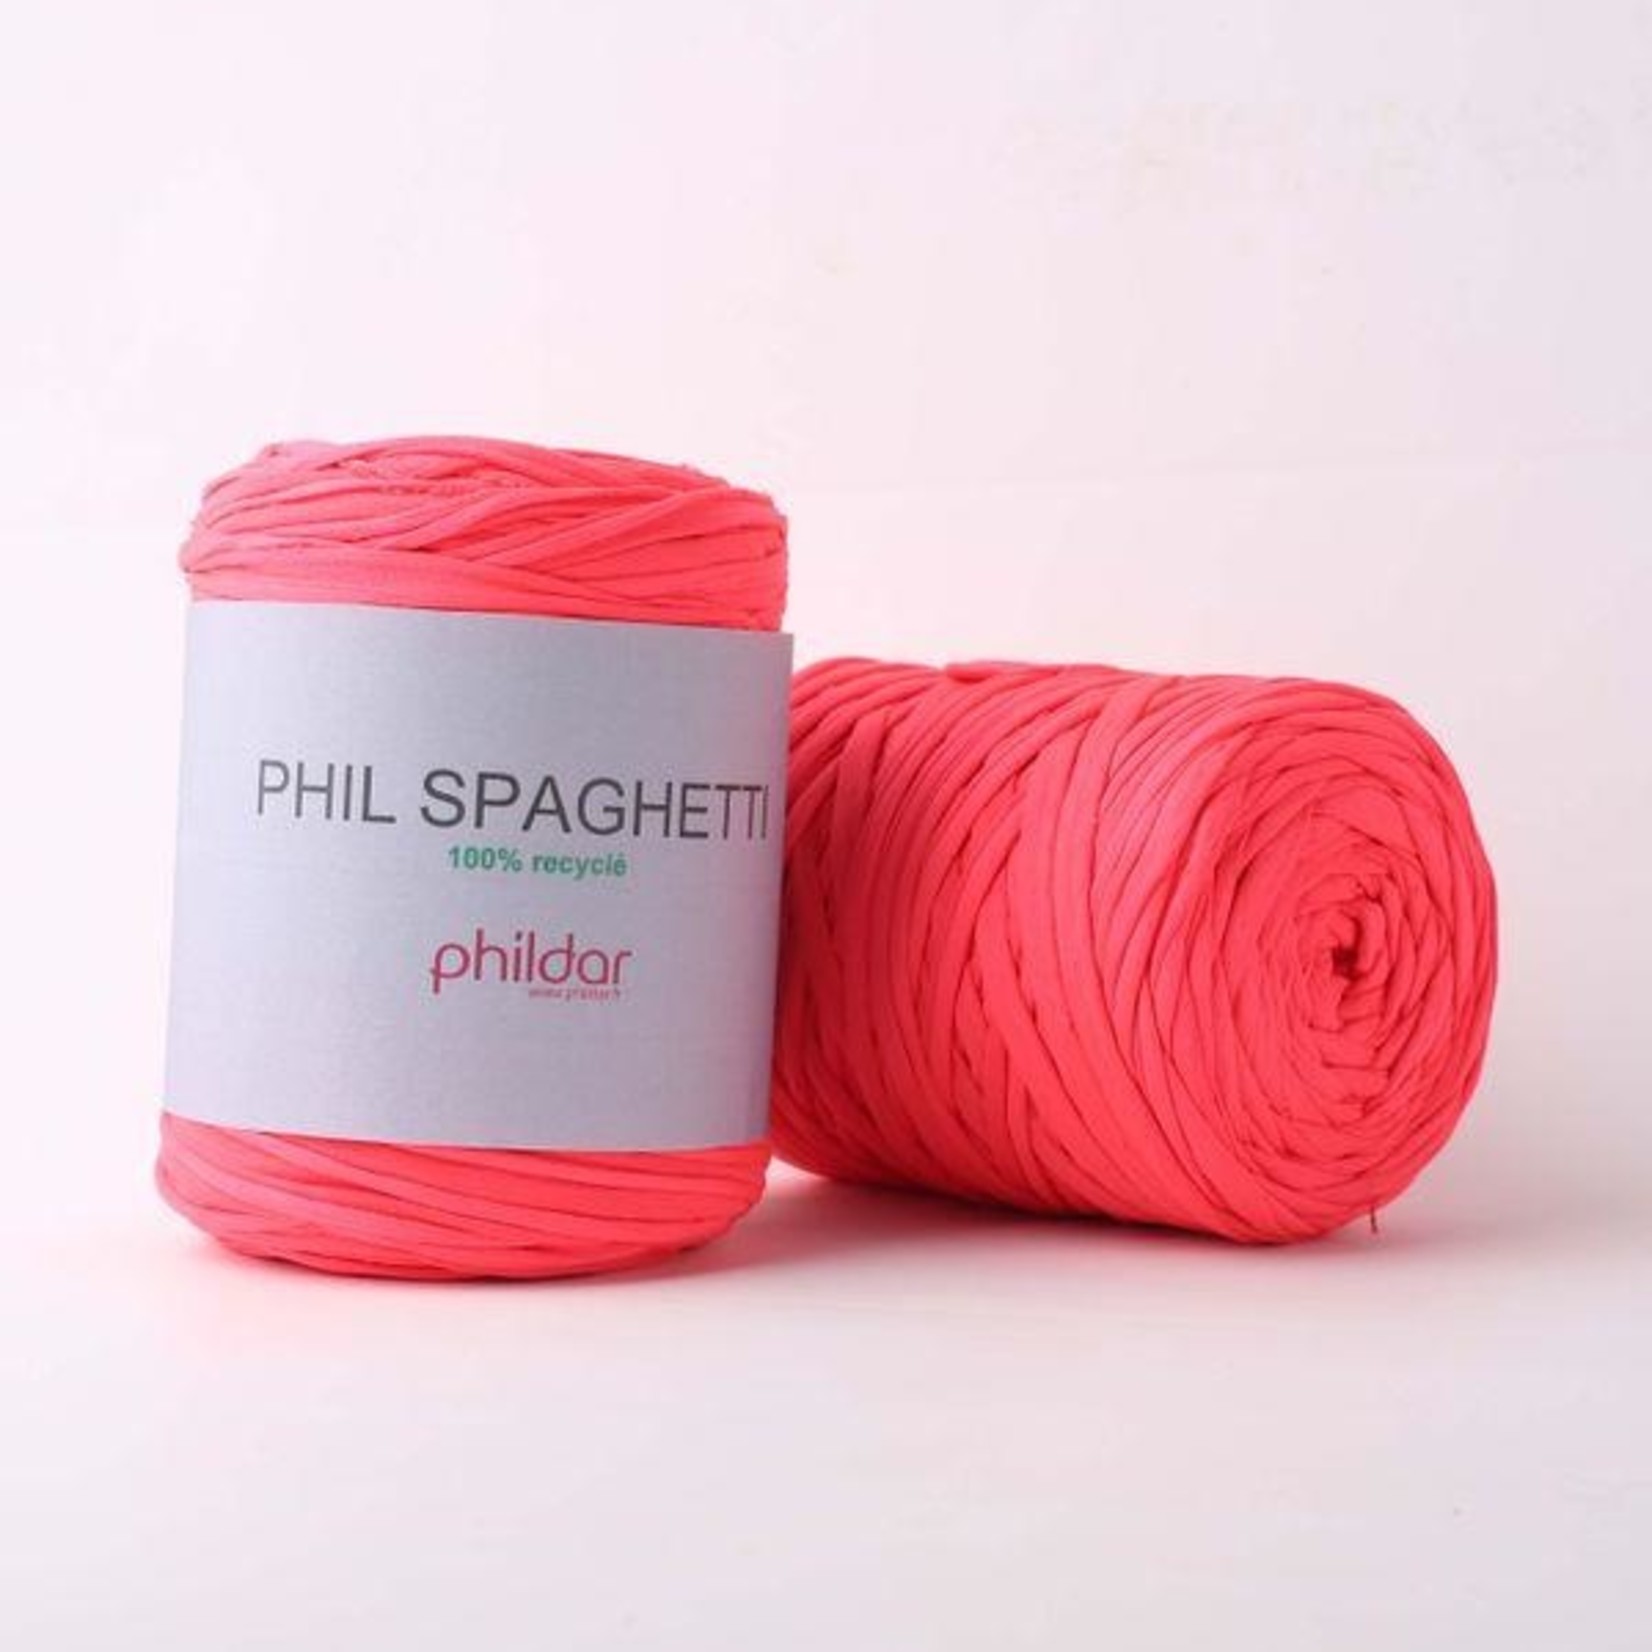 Phildar Phil Spaghetti by Phildar